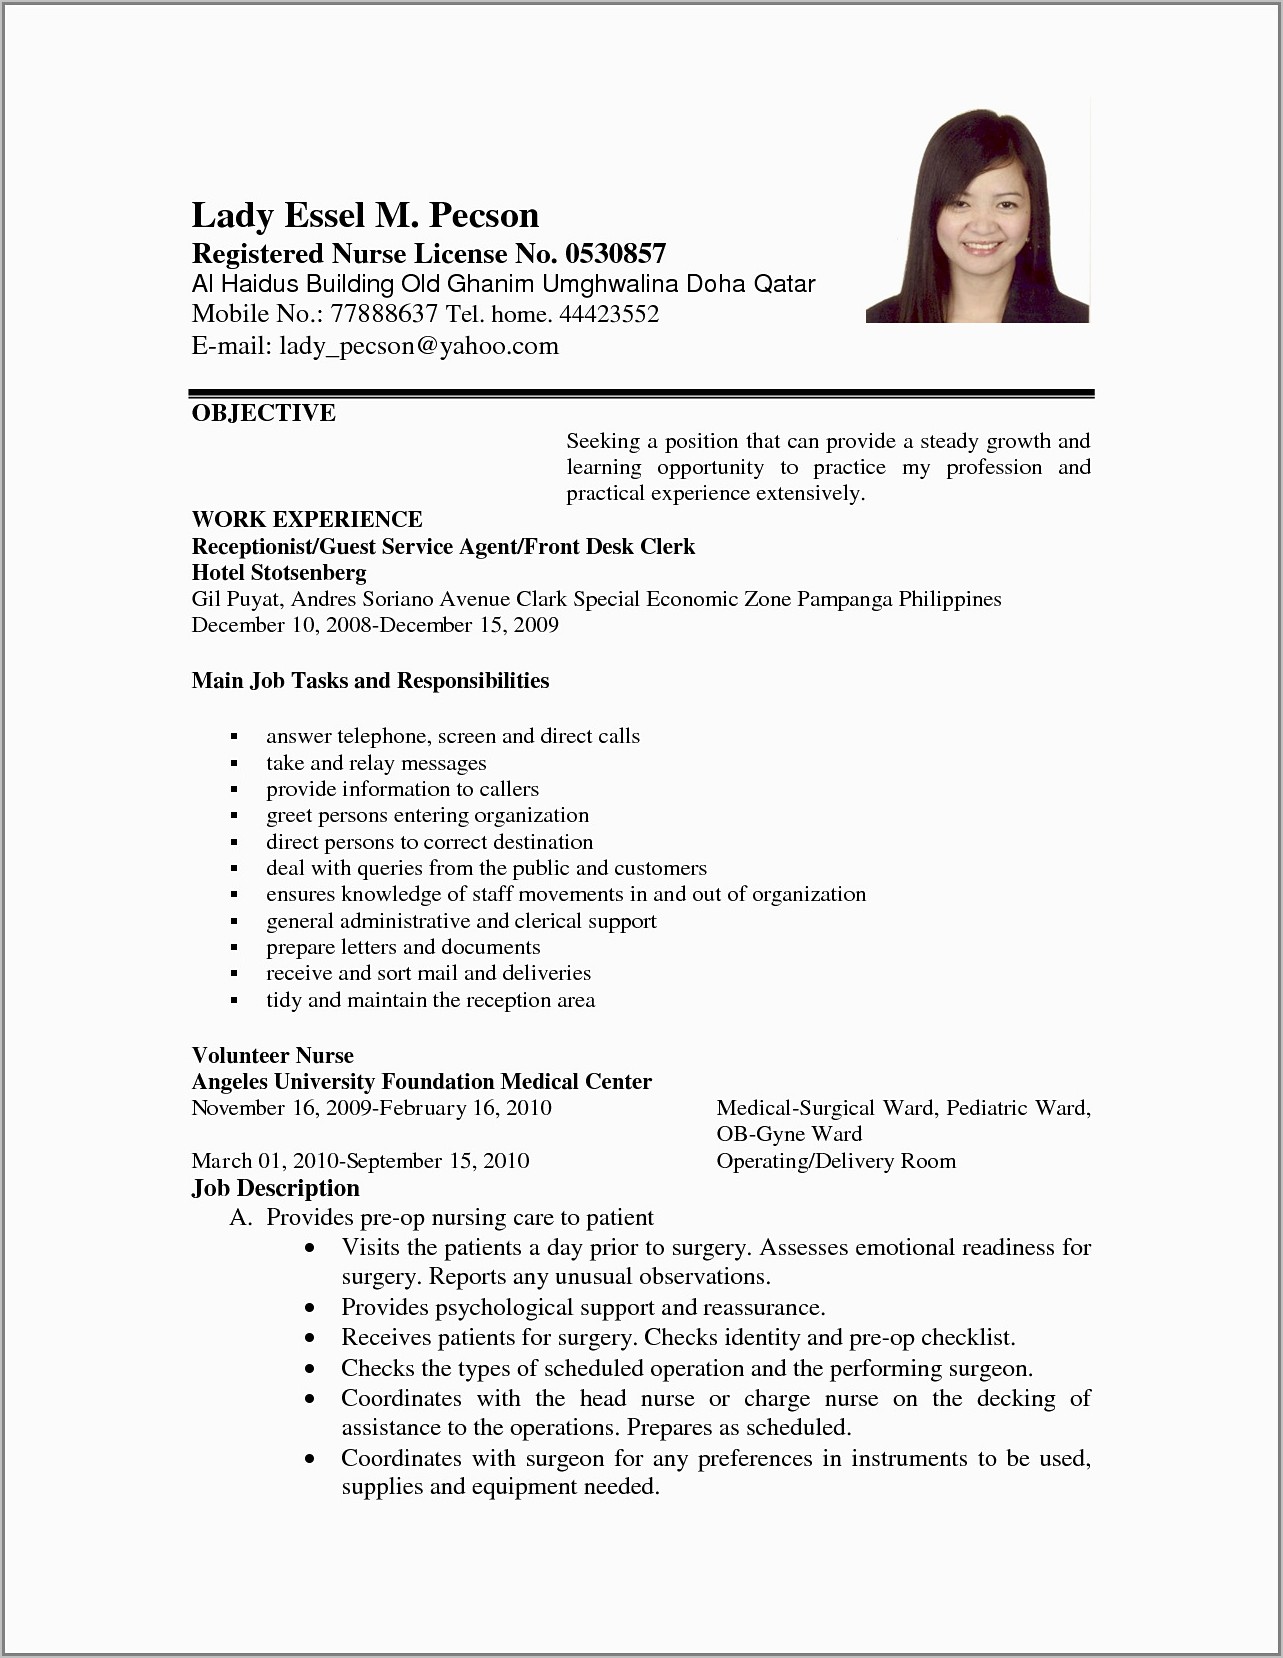 Resume Format For Nurses In Kerala